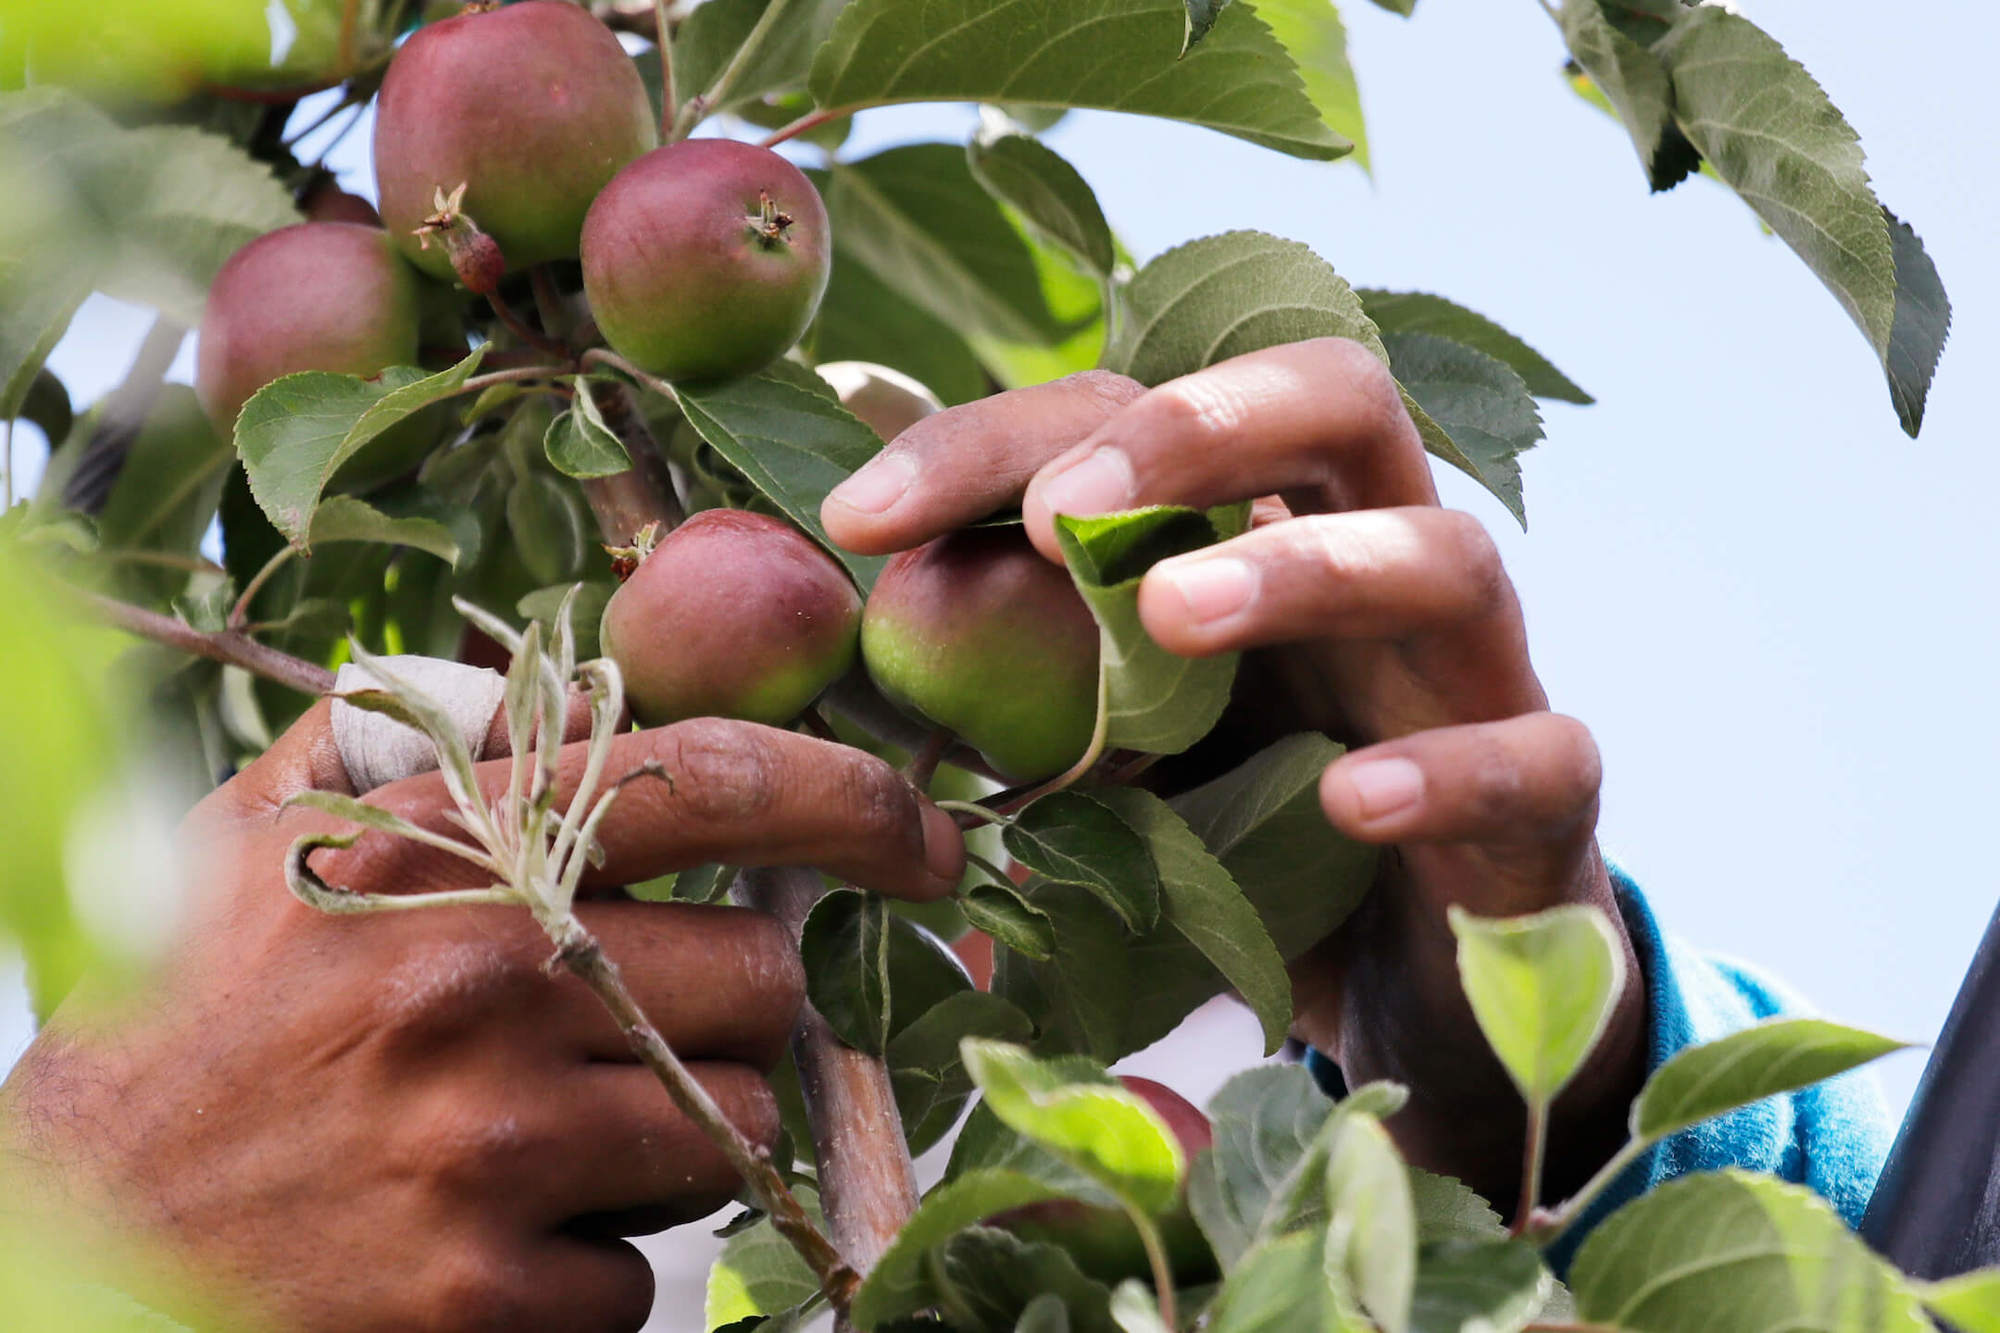 farmworker pulls honey crisp apple off a tree in WA. September 2020